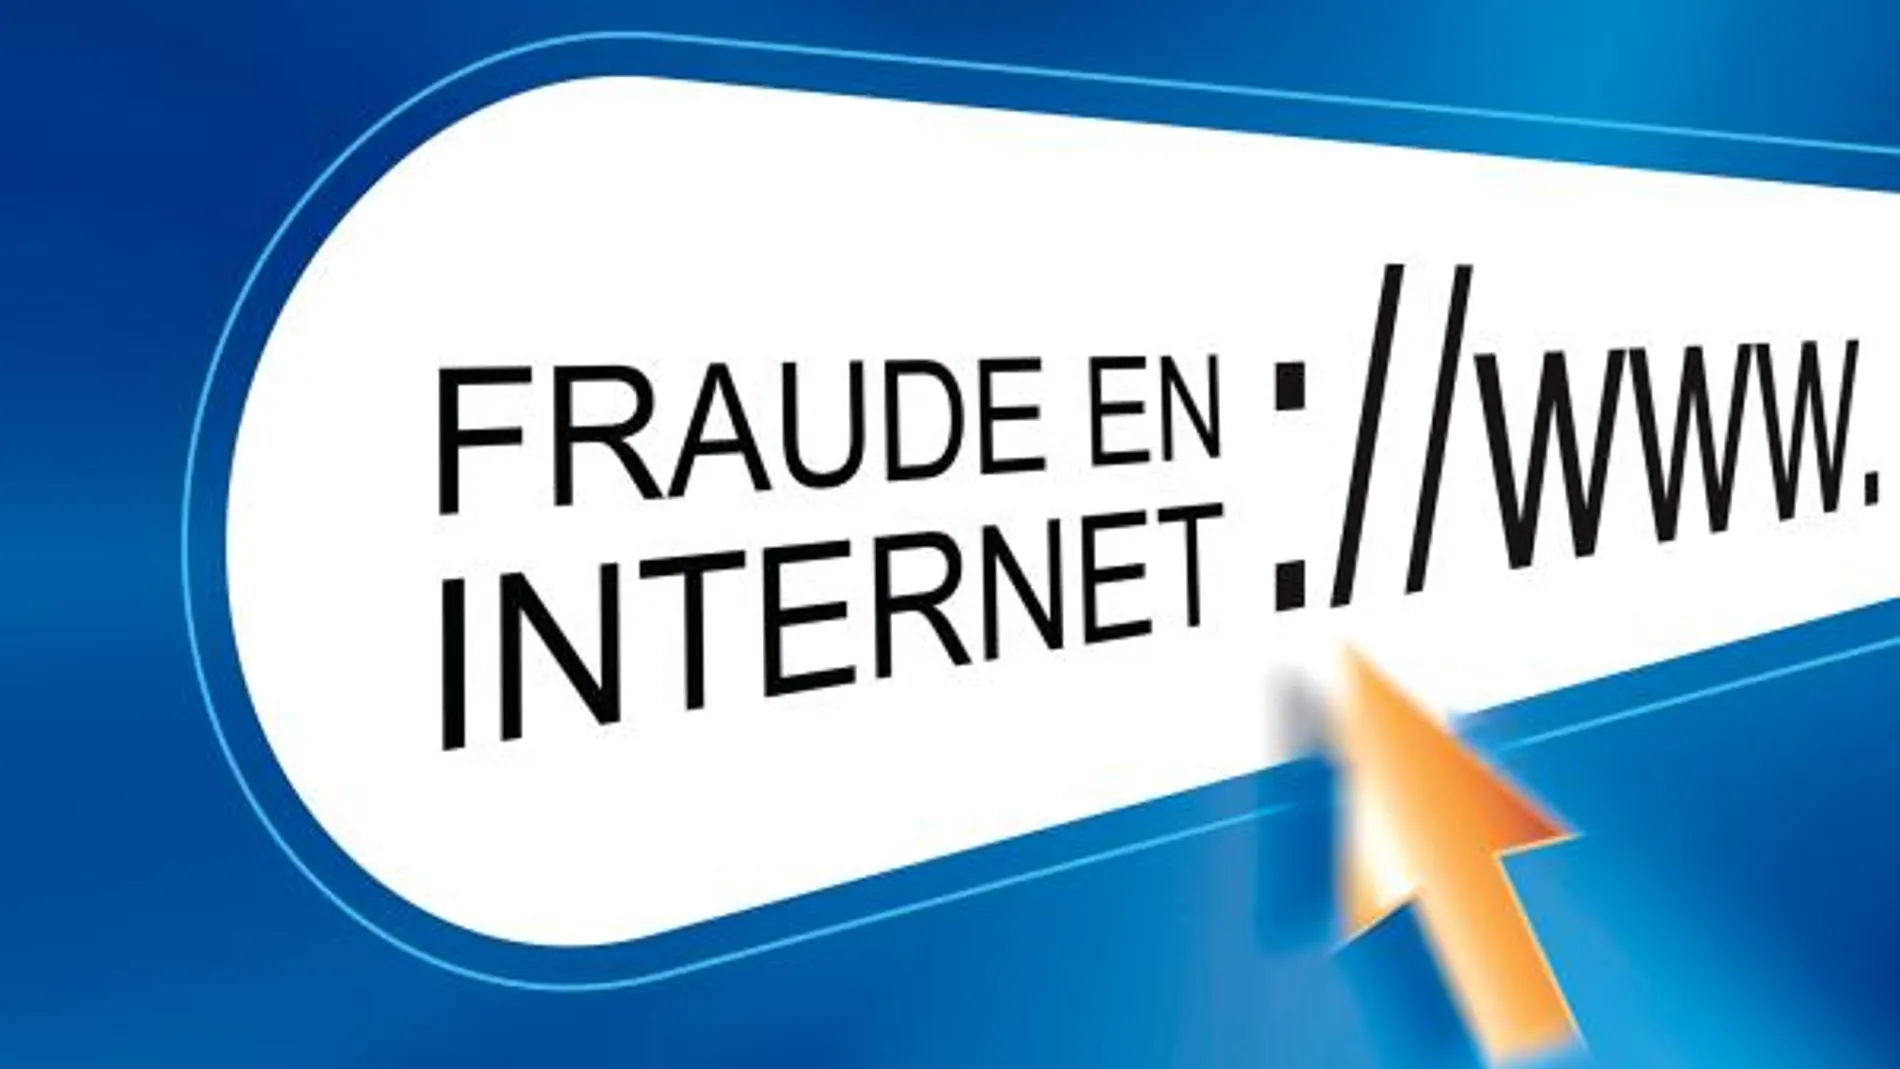 Fraude en internet